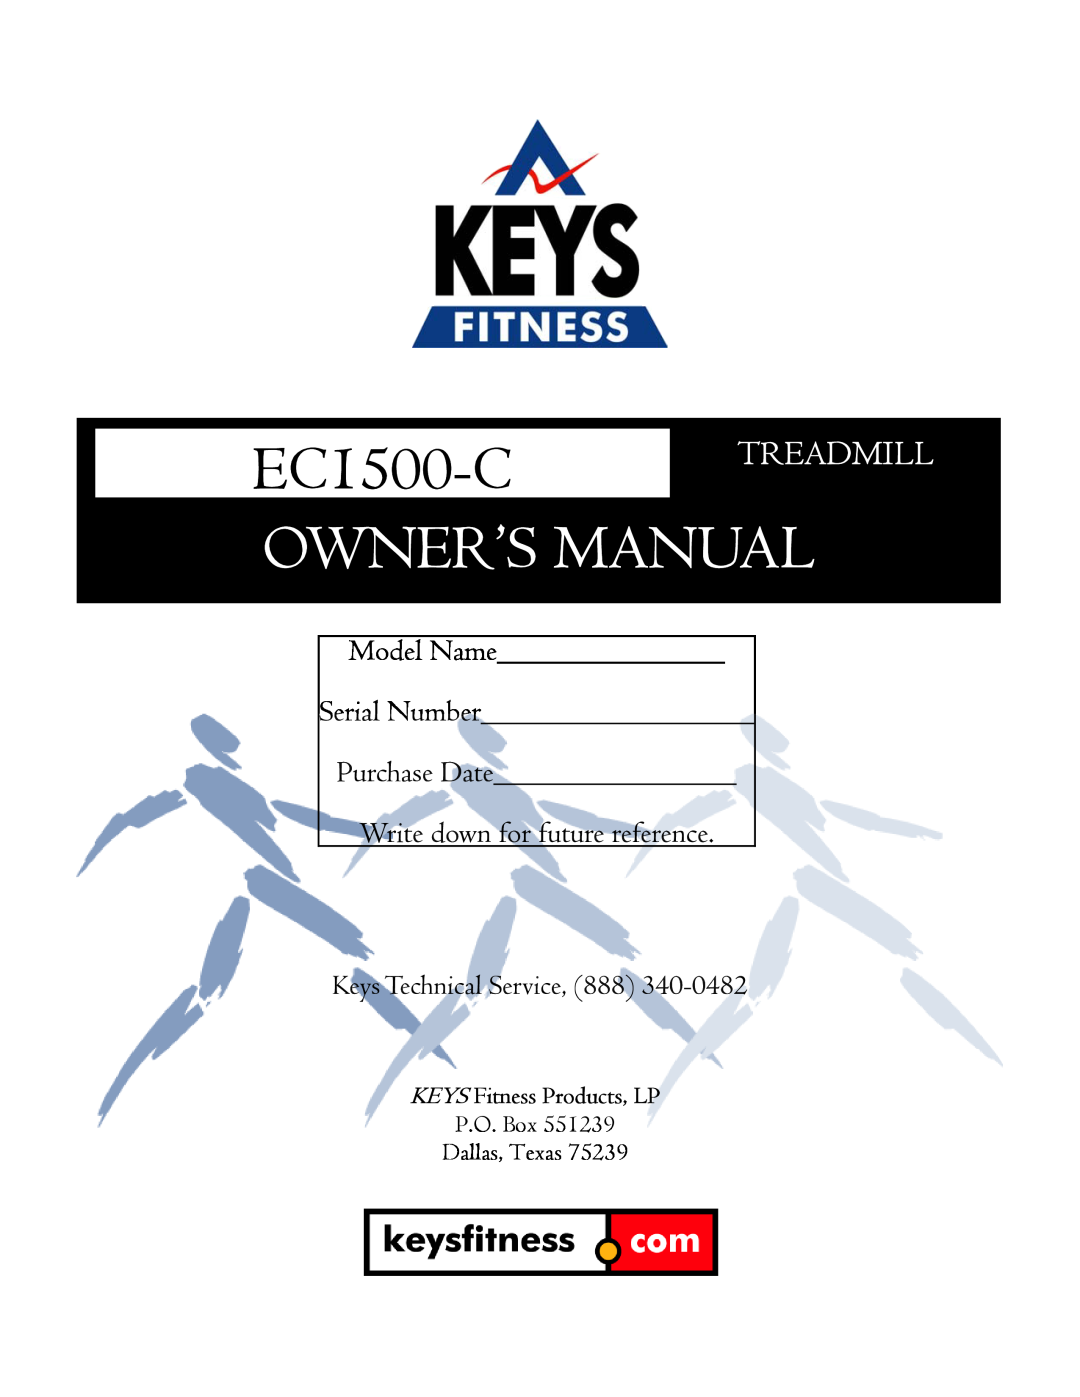 Keys Fitness owner manual EC1500-C TREADMILL, Owner’S Manual, KEYS Fitness Products, LP 